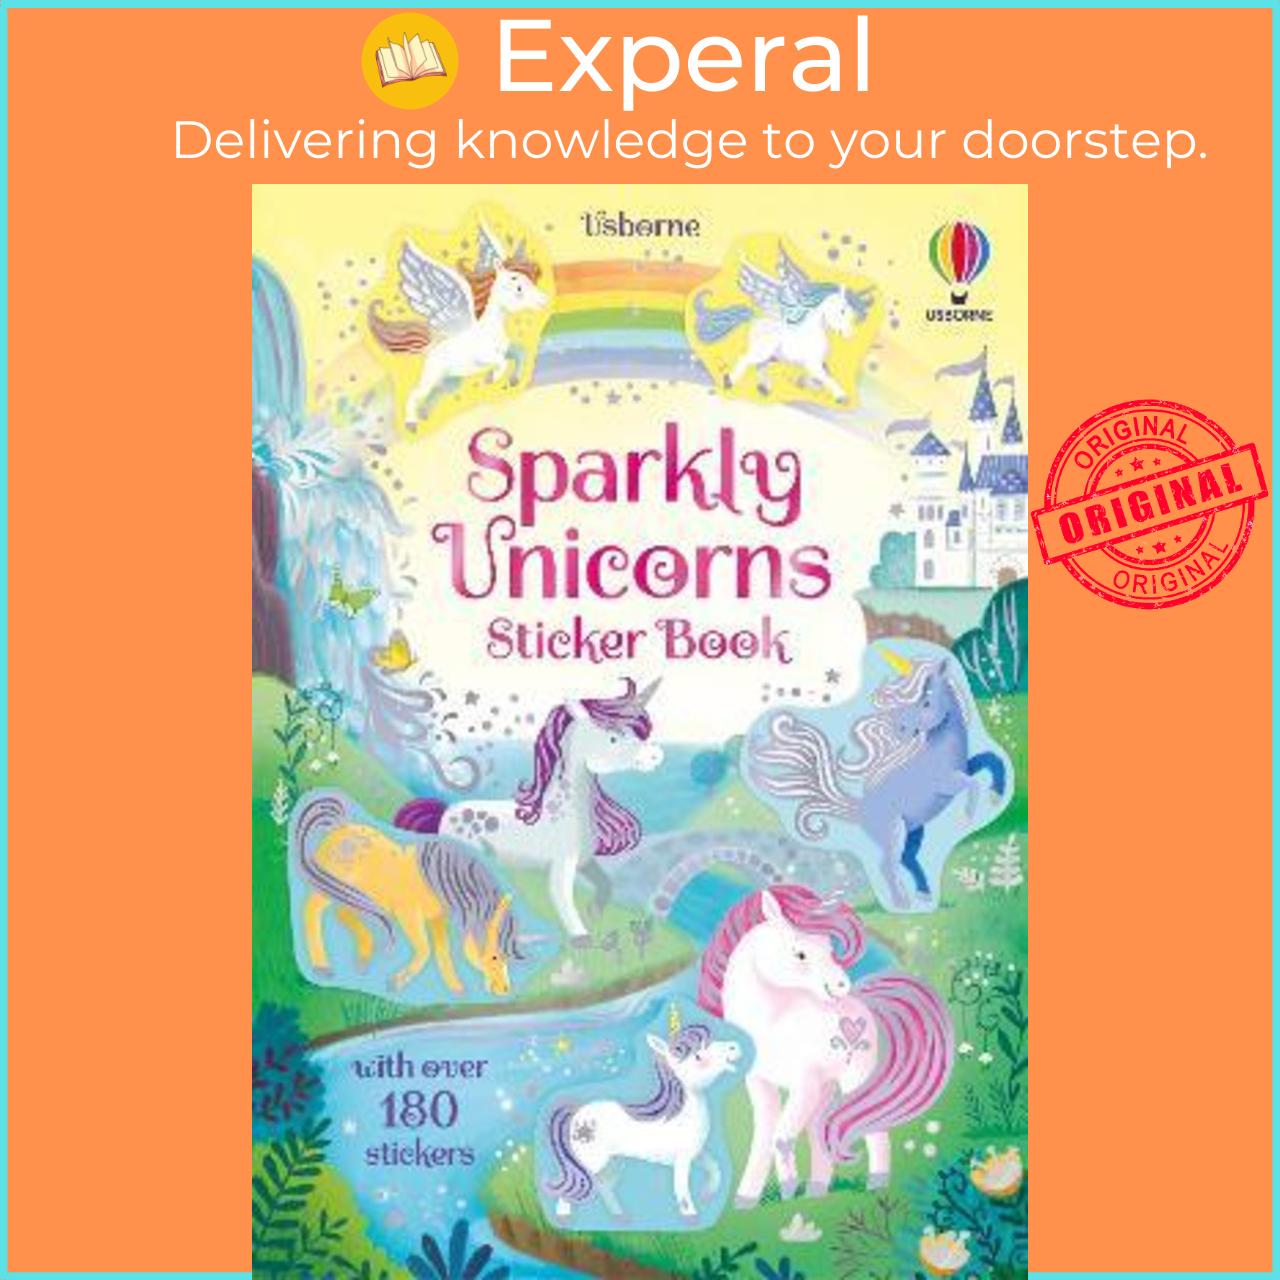 Sách - Sparkly Unicorns Sticker Book by Kristie Pickersgill (UK edition, paperback)